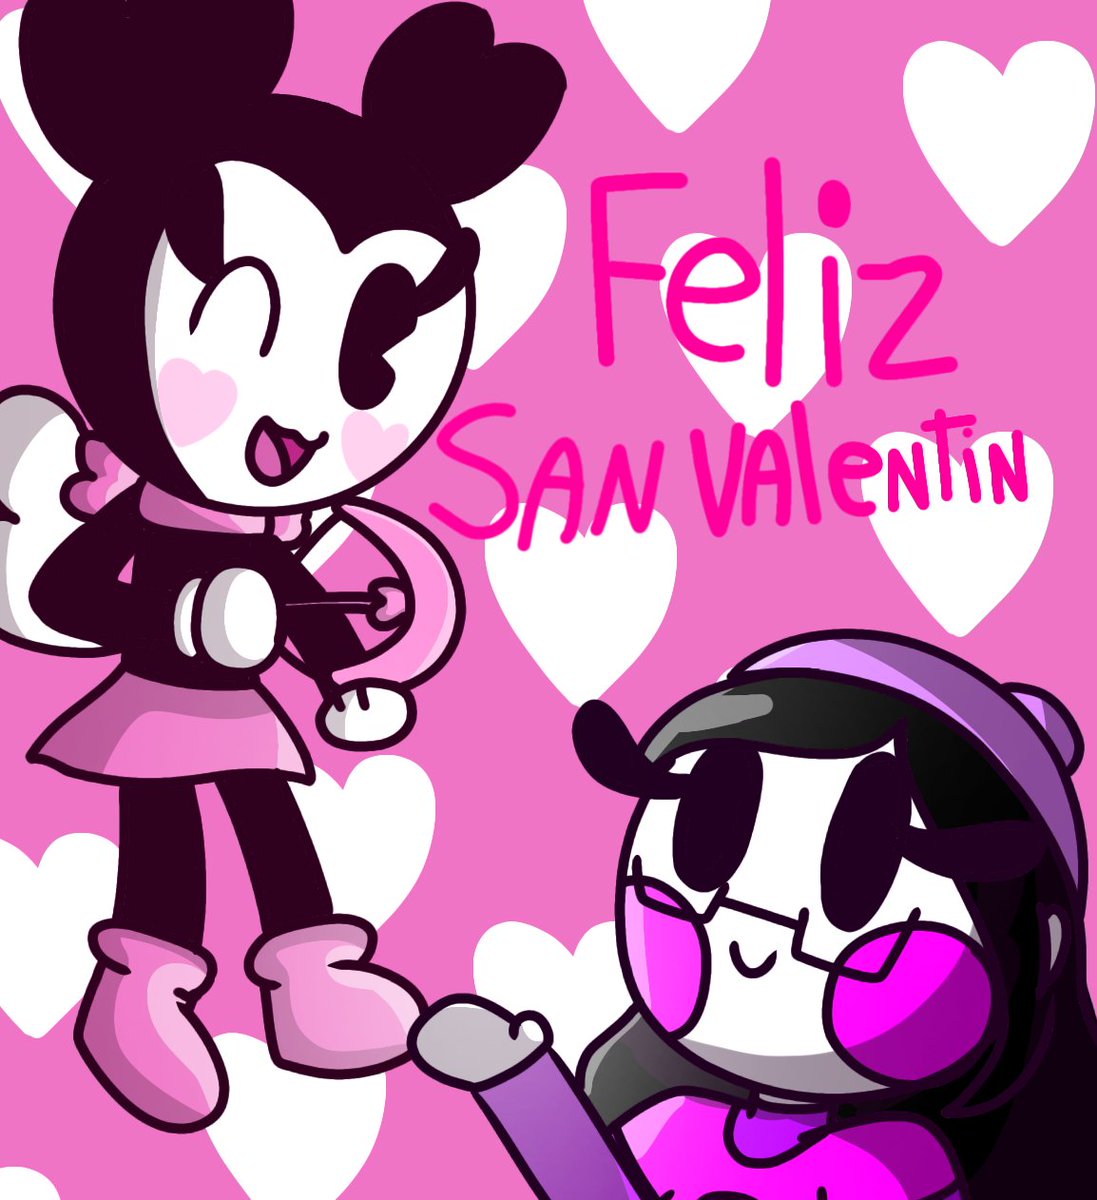 Feliz San Valentín a todos

#oc #originalcharacter #toonoc #digitaldrawing #14DeFebrero #ValentinesDay #drawing